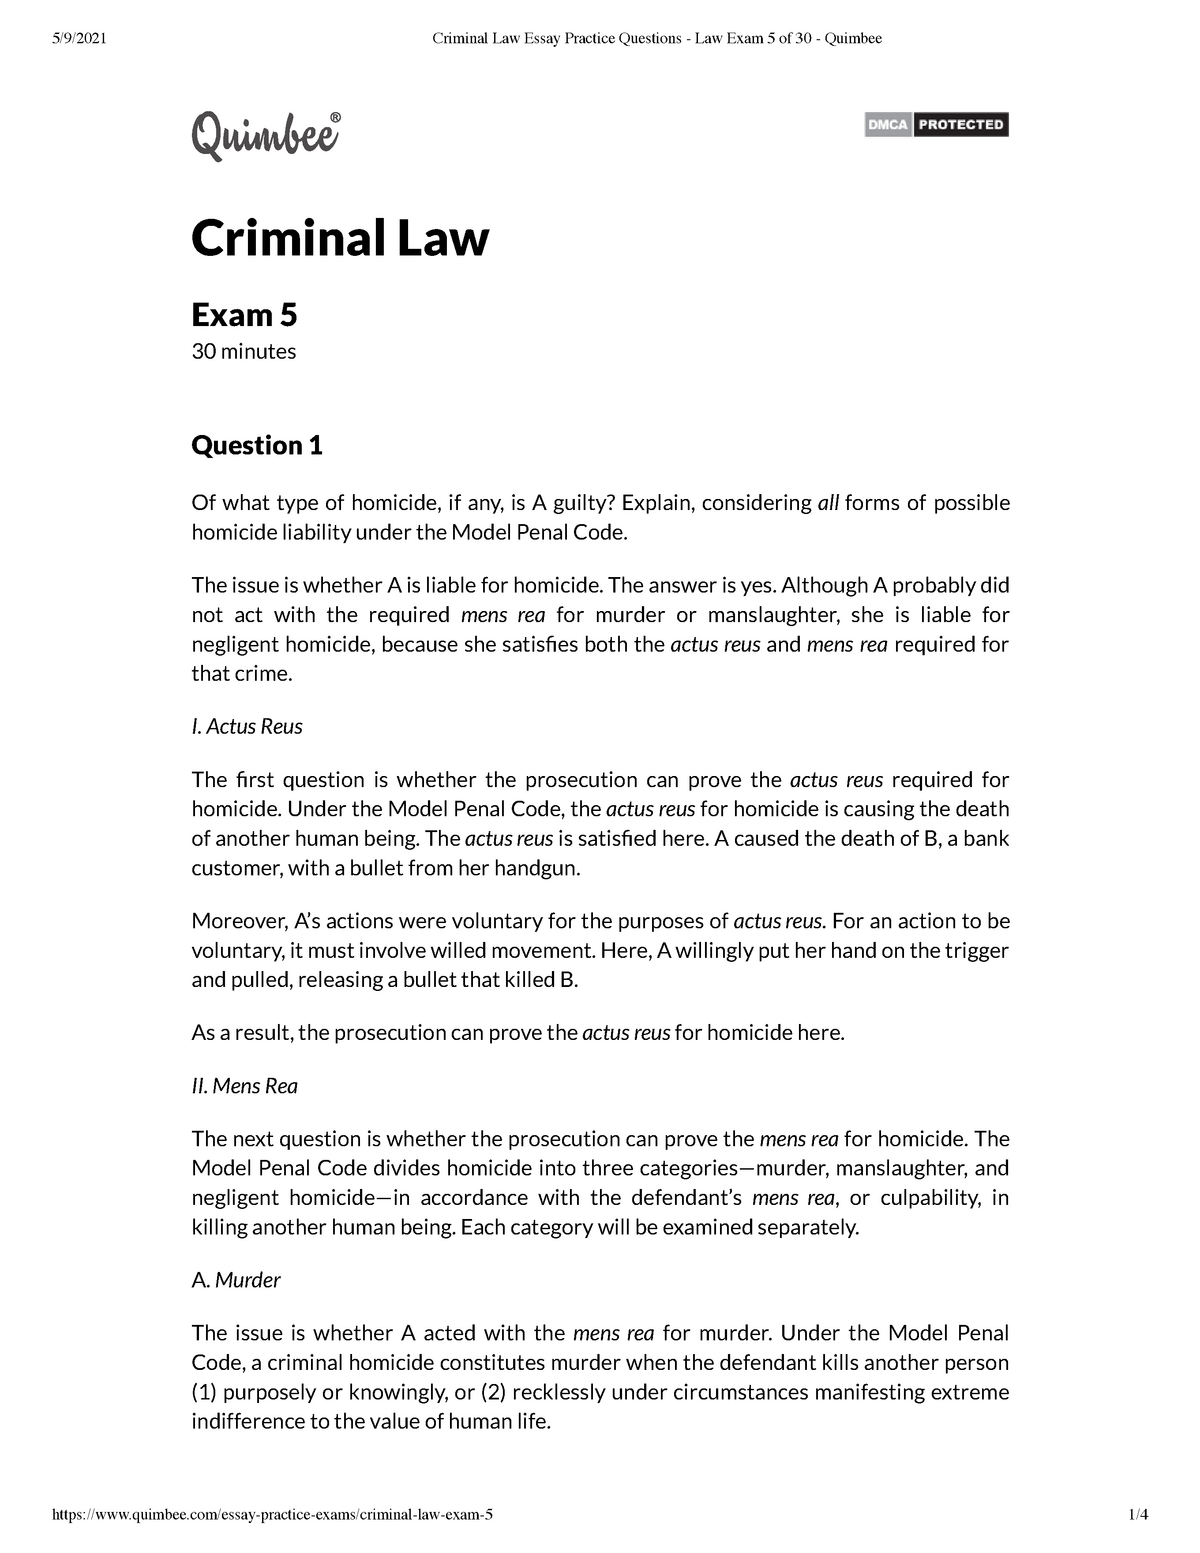 criminal law essay example